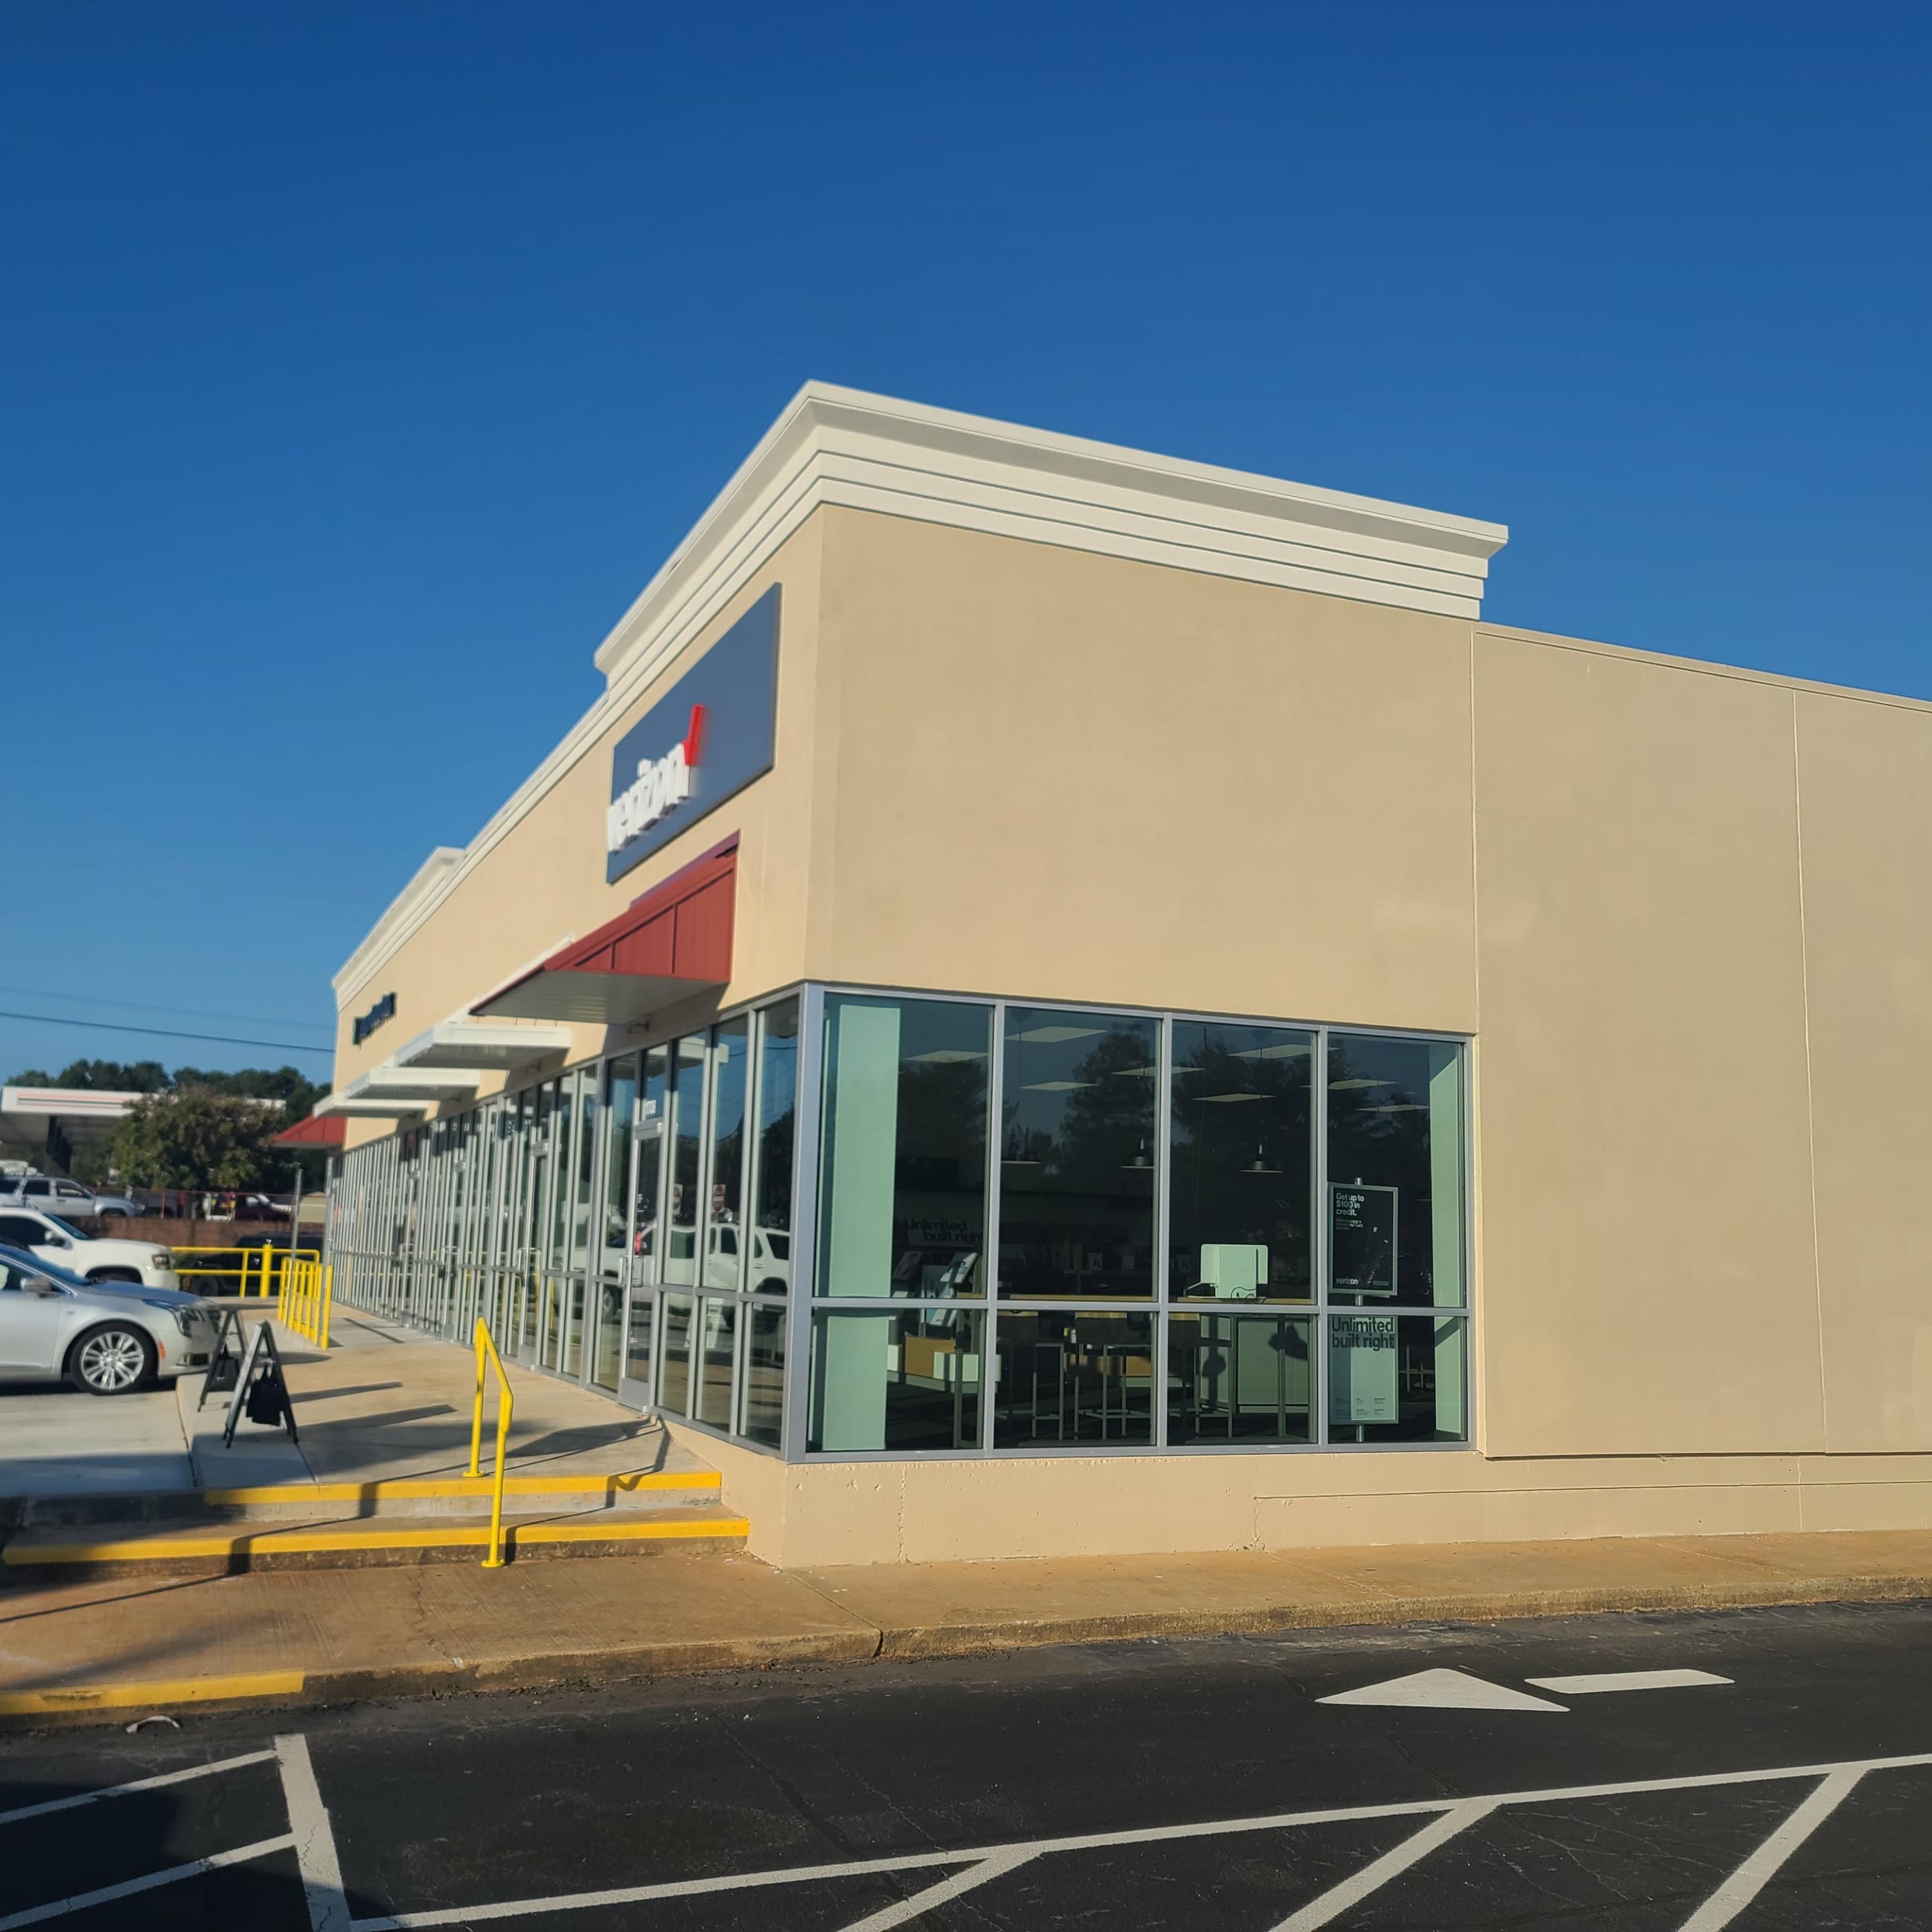 TCC, Verizon Authorized Retailer
1708 E Greenville St
Anderson, SC